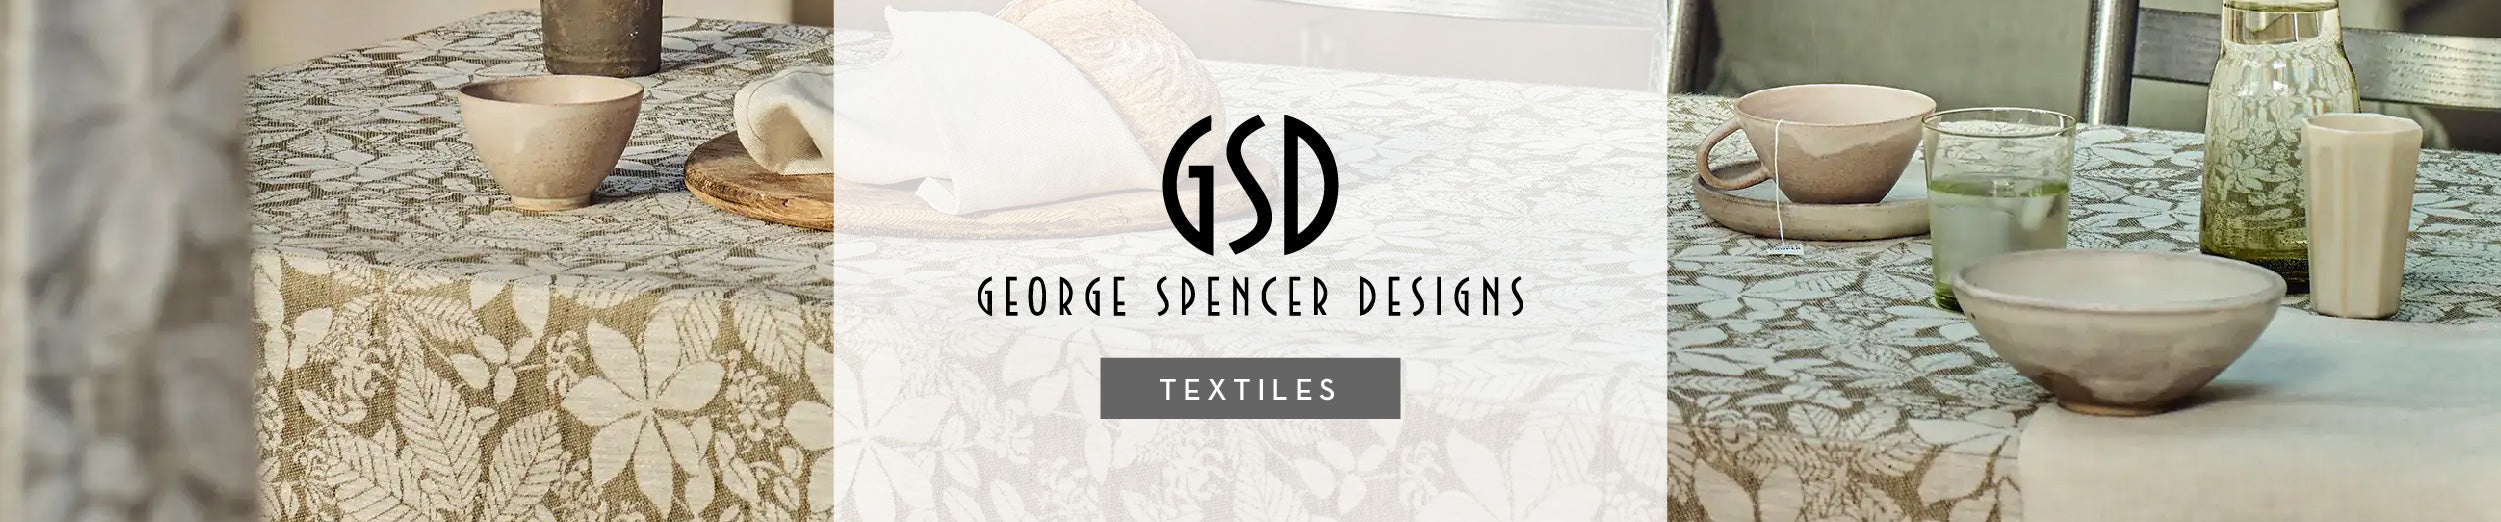 505 Picot Braid - George Spencer Designs